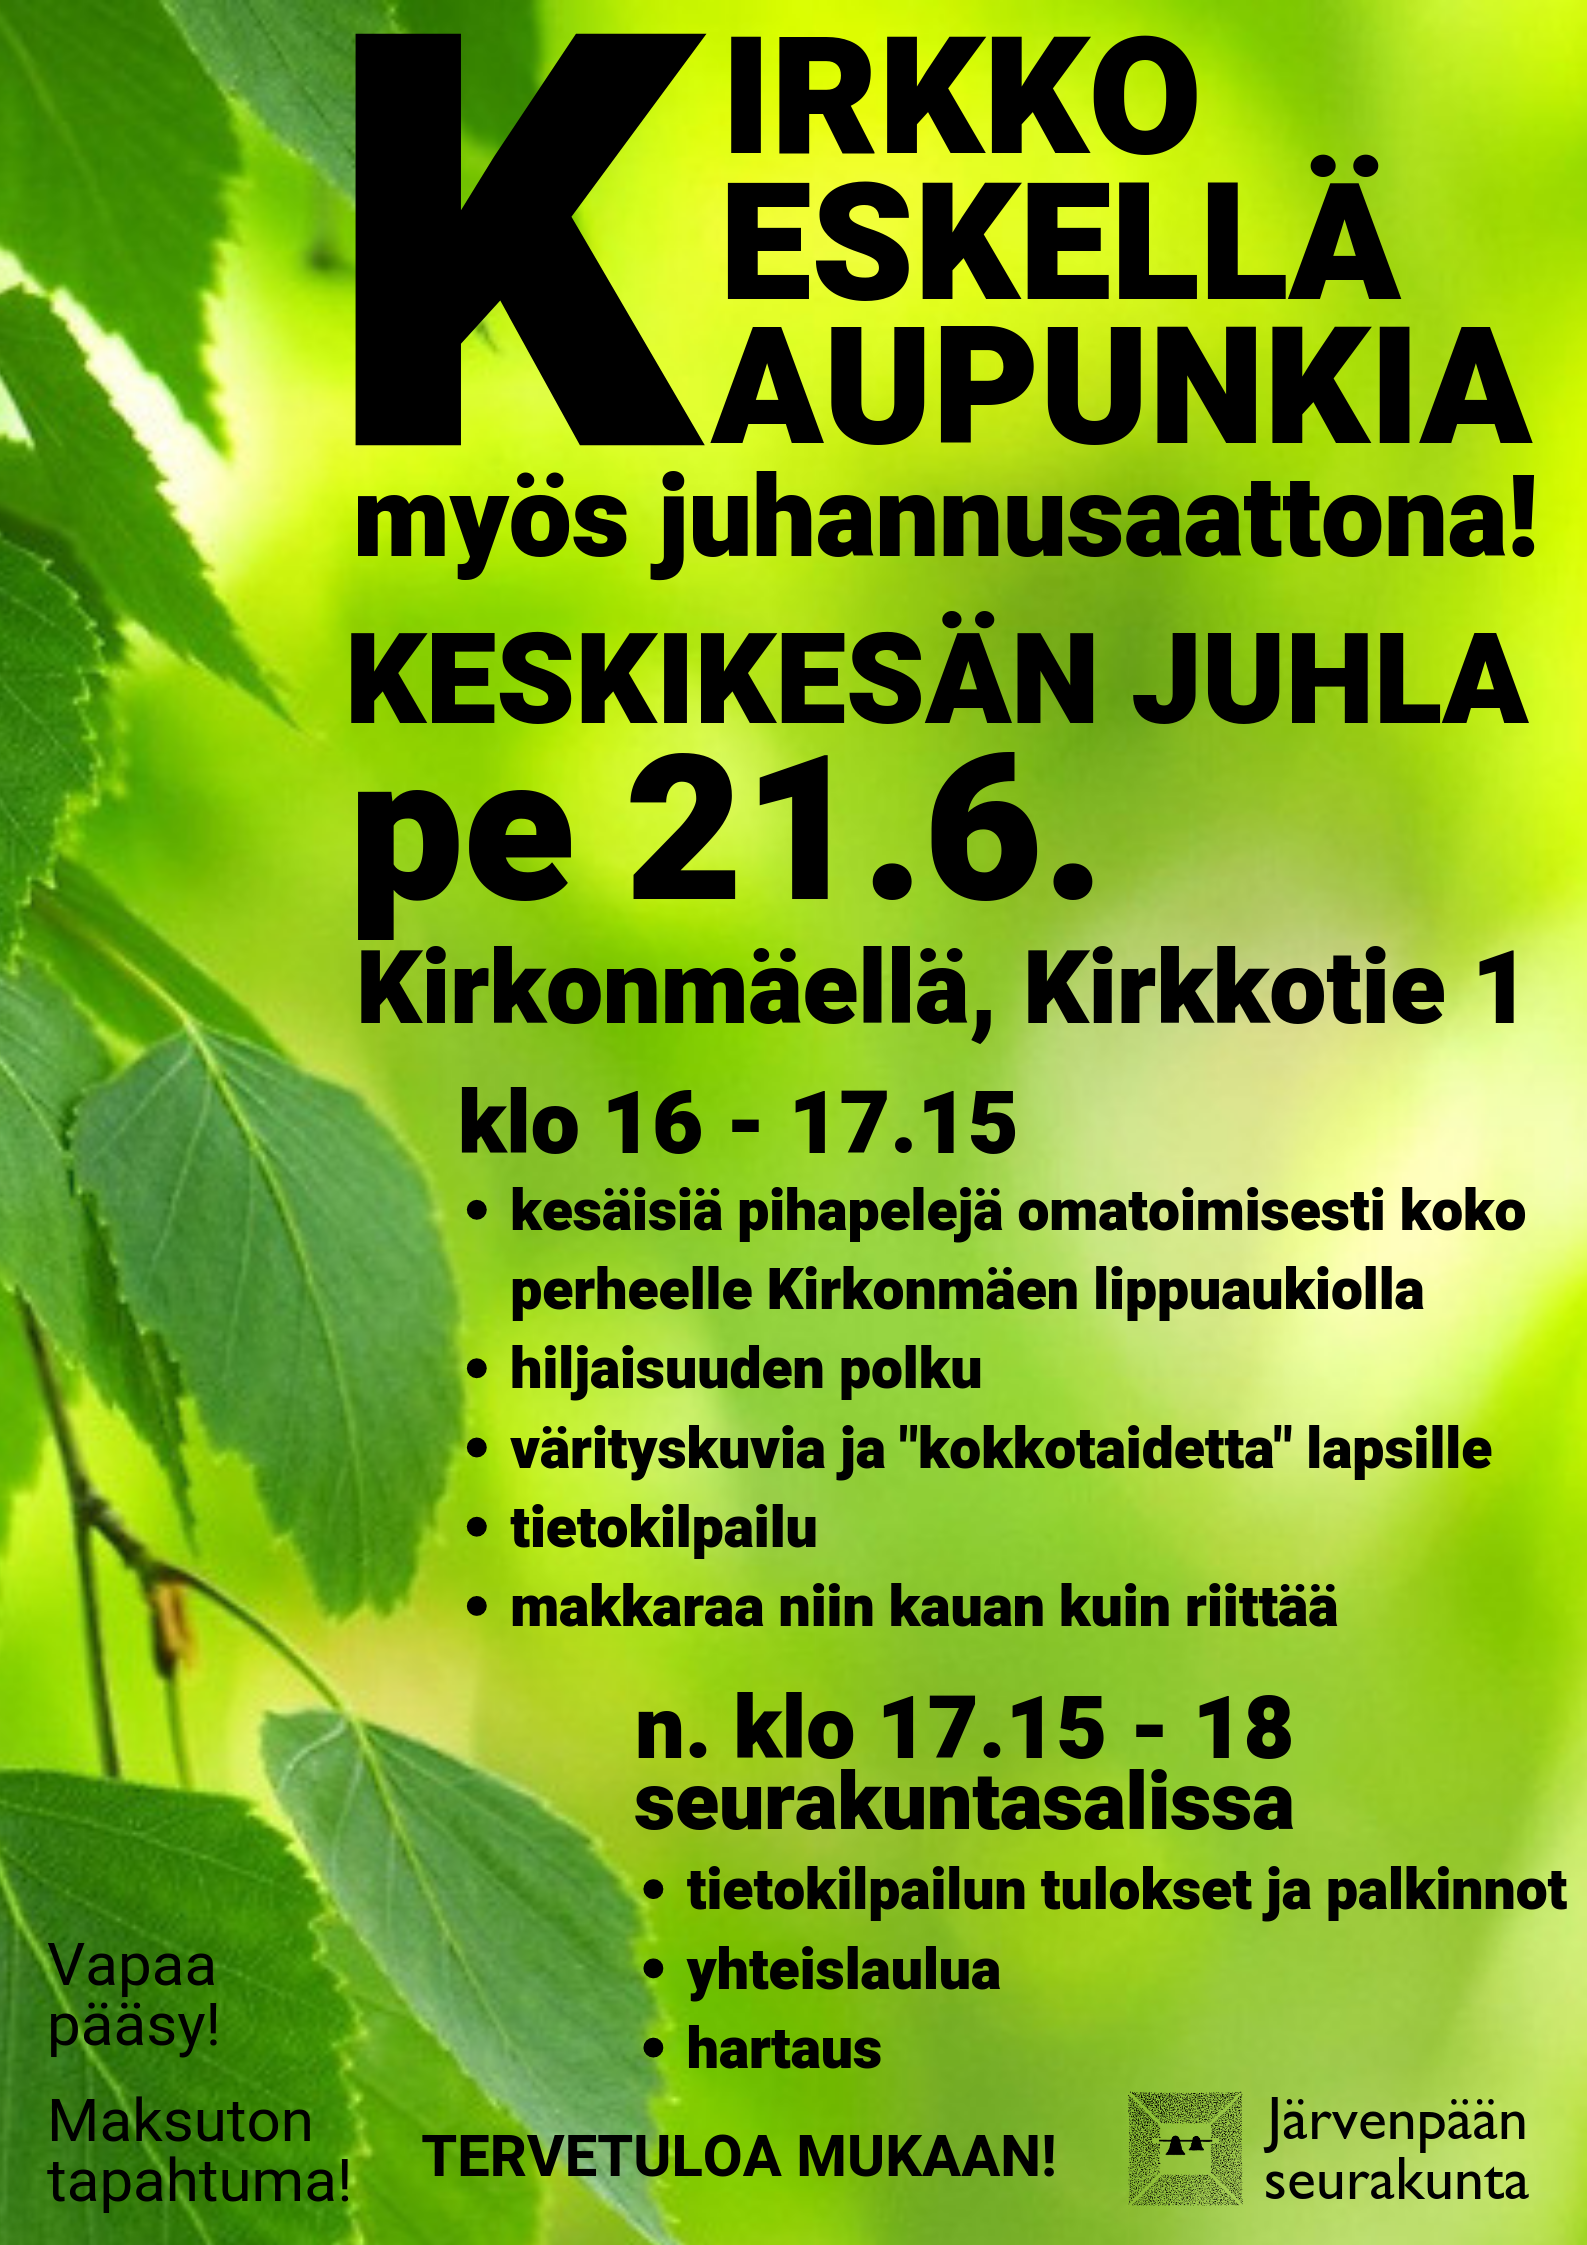 juhannus - Järvenpään seurakunta